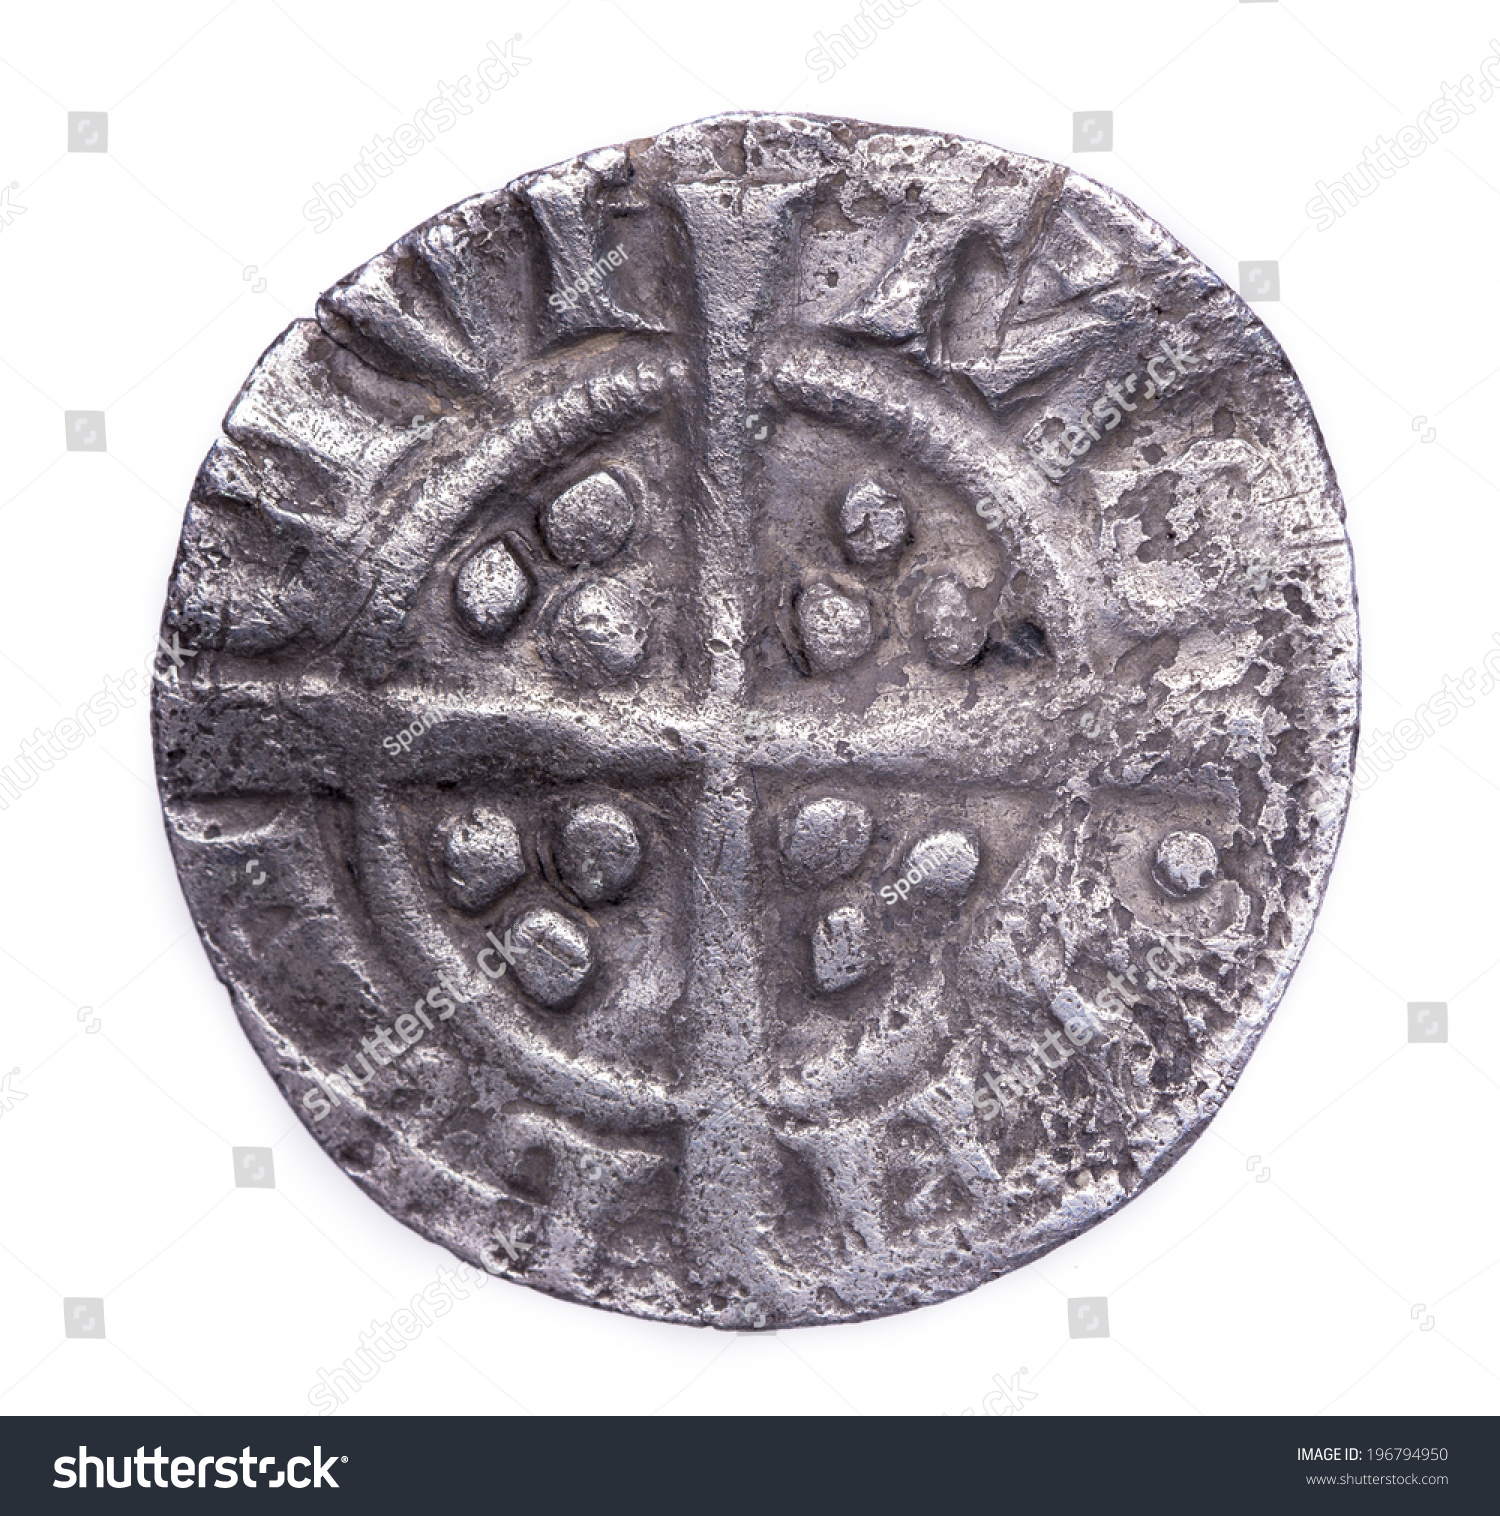 Hammered Silver Long Cross Penny Edward Stock Photo 196794950 | Shutterstock